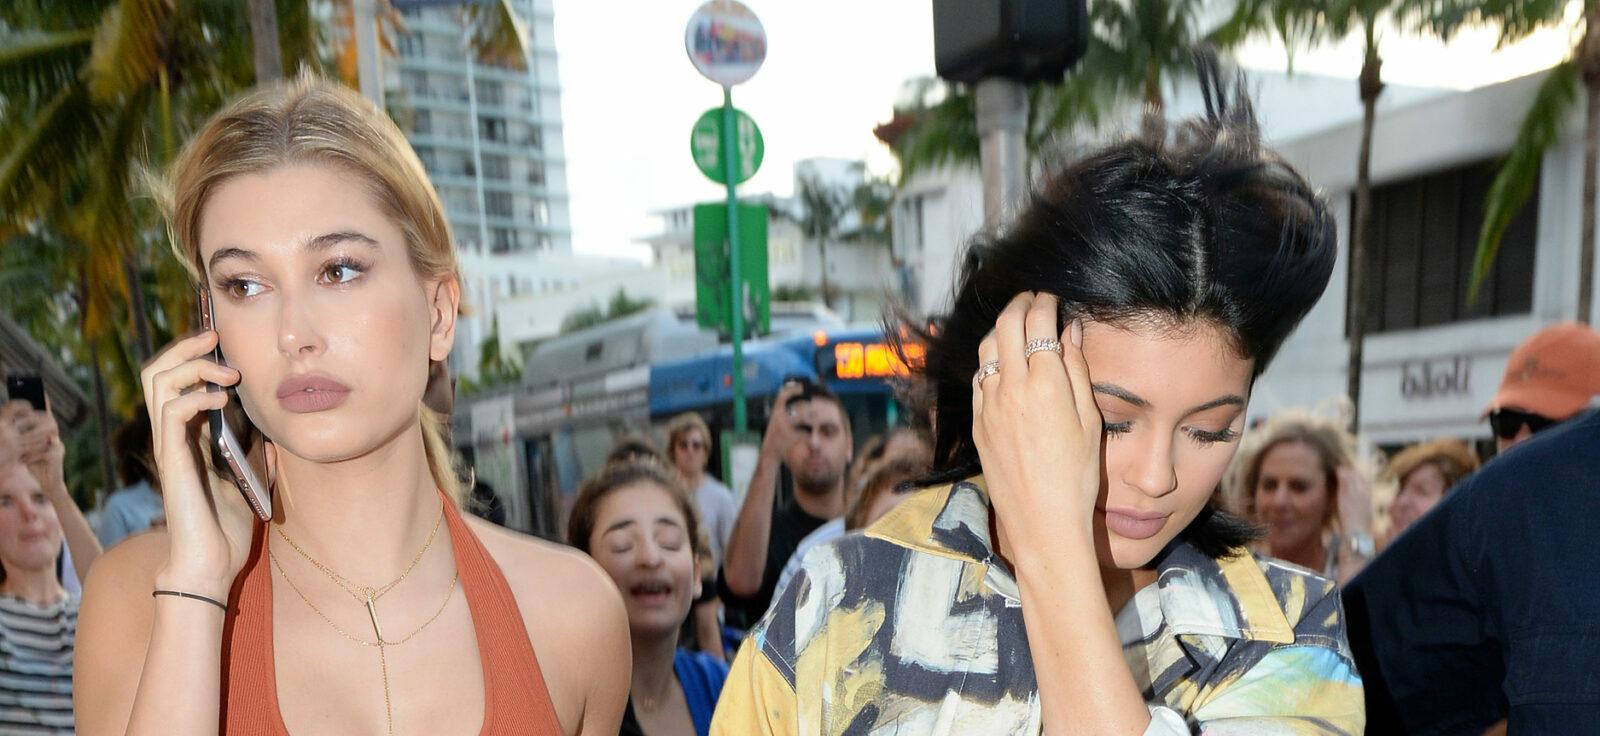 Kylie Jenner wearing an art-patterned jumpsuit shops with model friend Hailey Baldwin in South Beach